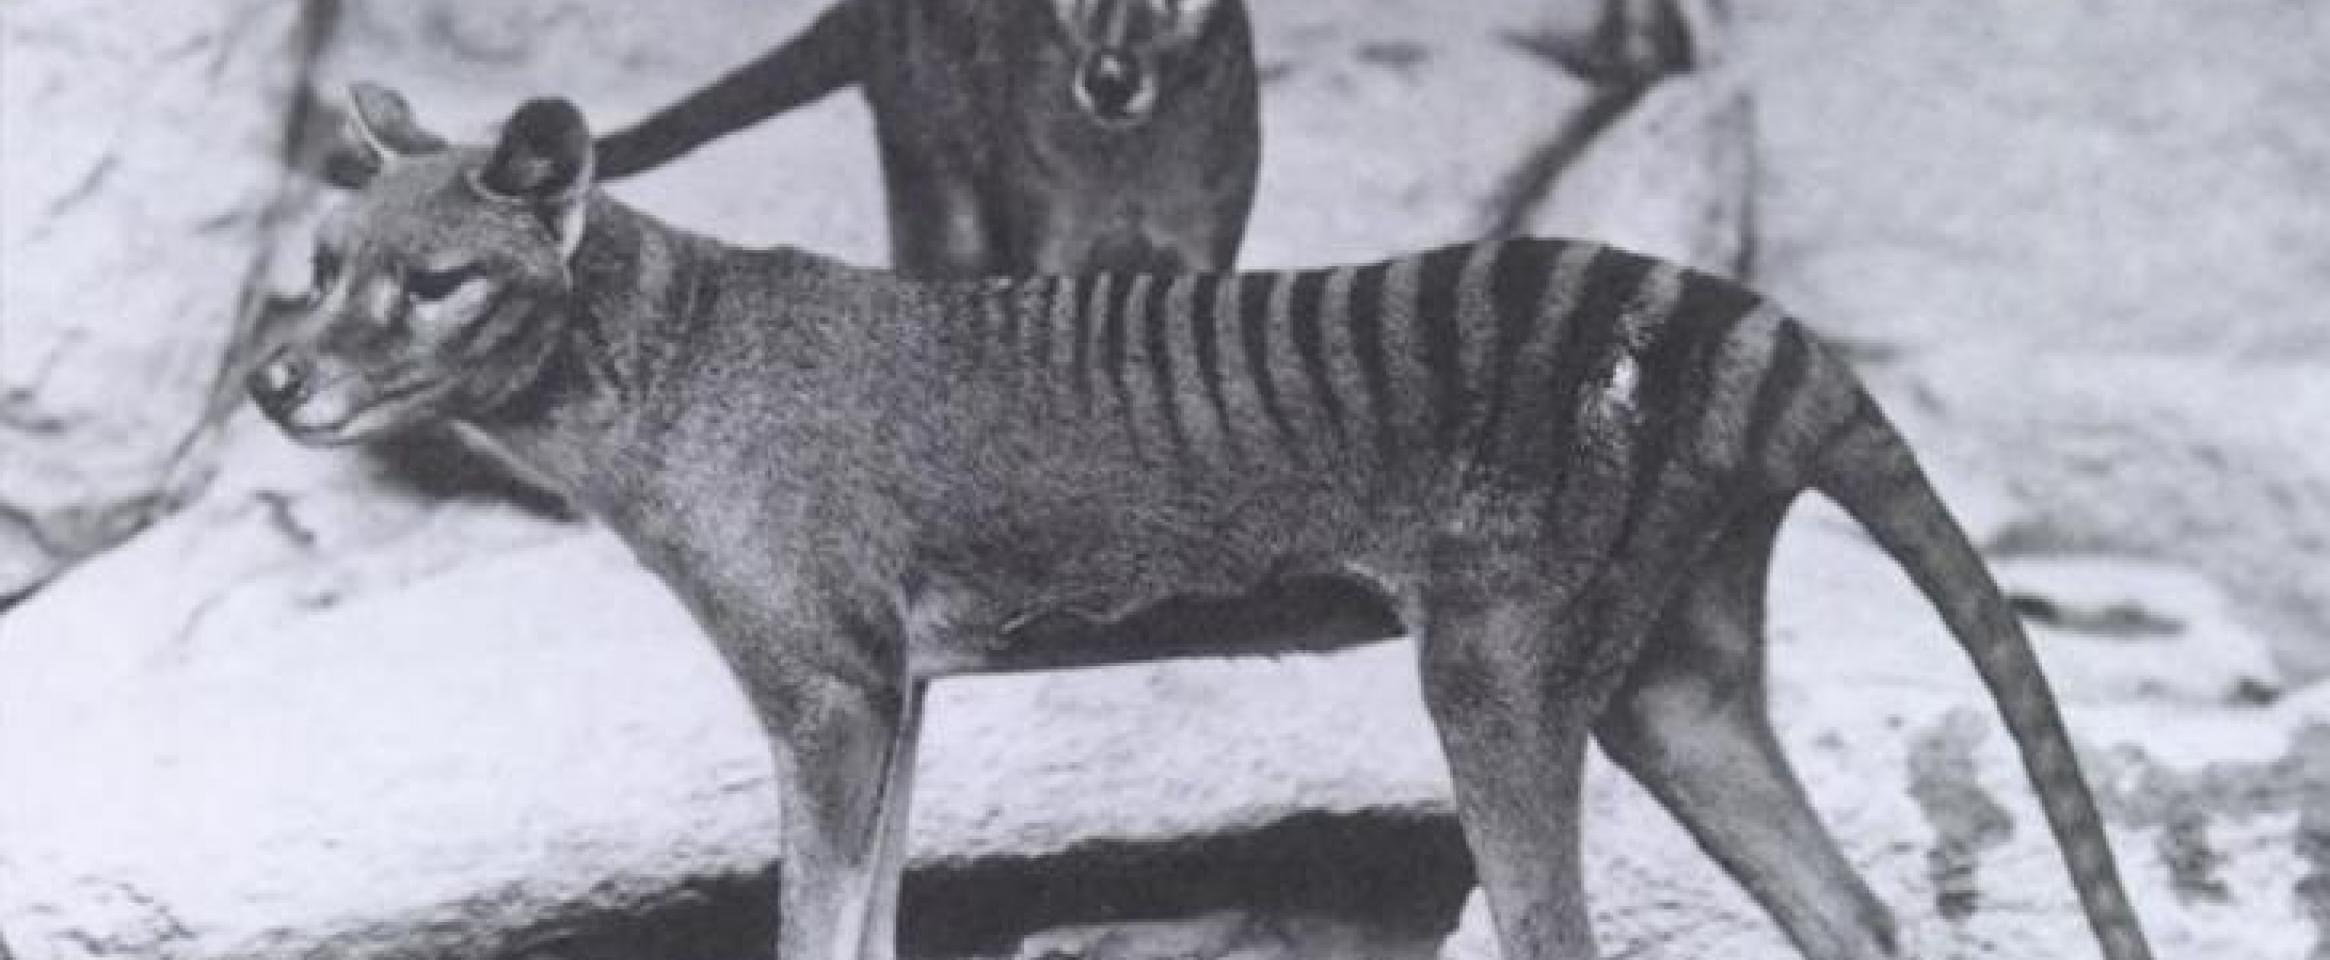 Scientists are exploring ways to recreate the extinct Tasmanian tiger.